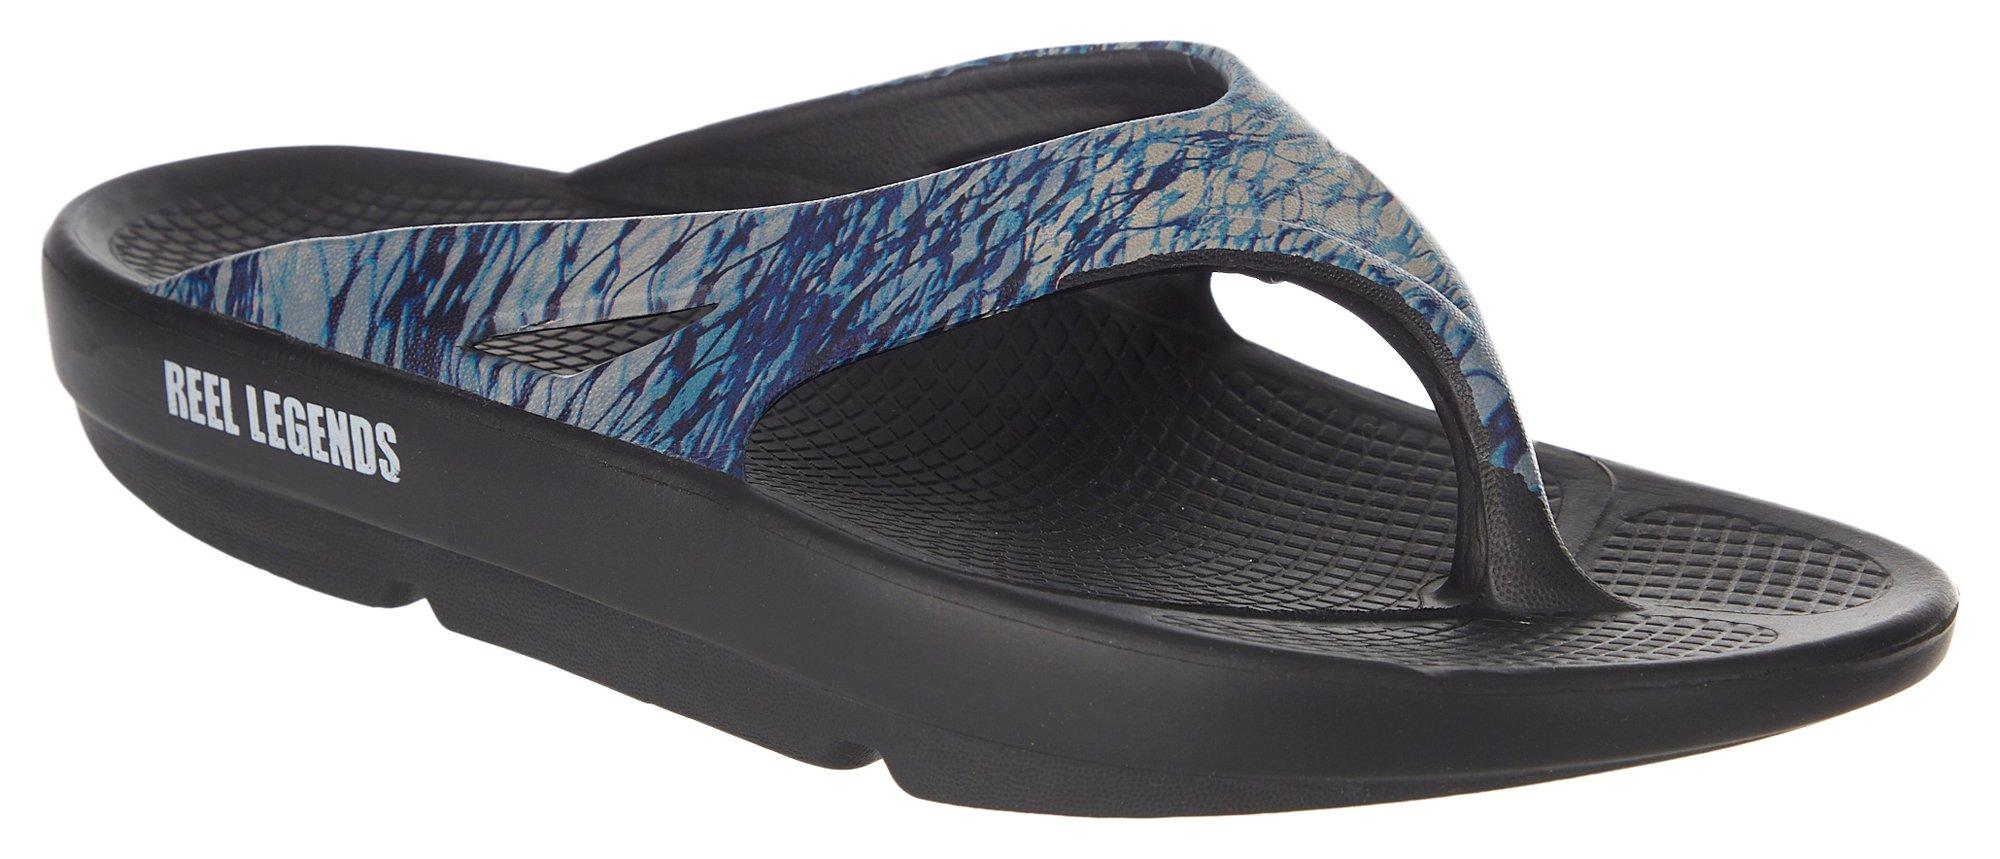 Buy Reel Legends Mens Coast Slide Sandals at Ubuy Nigeria